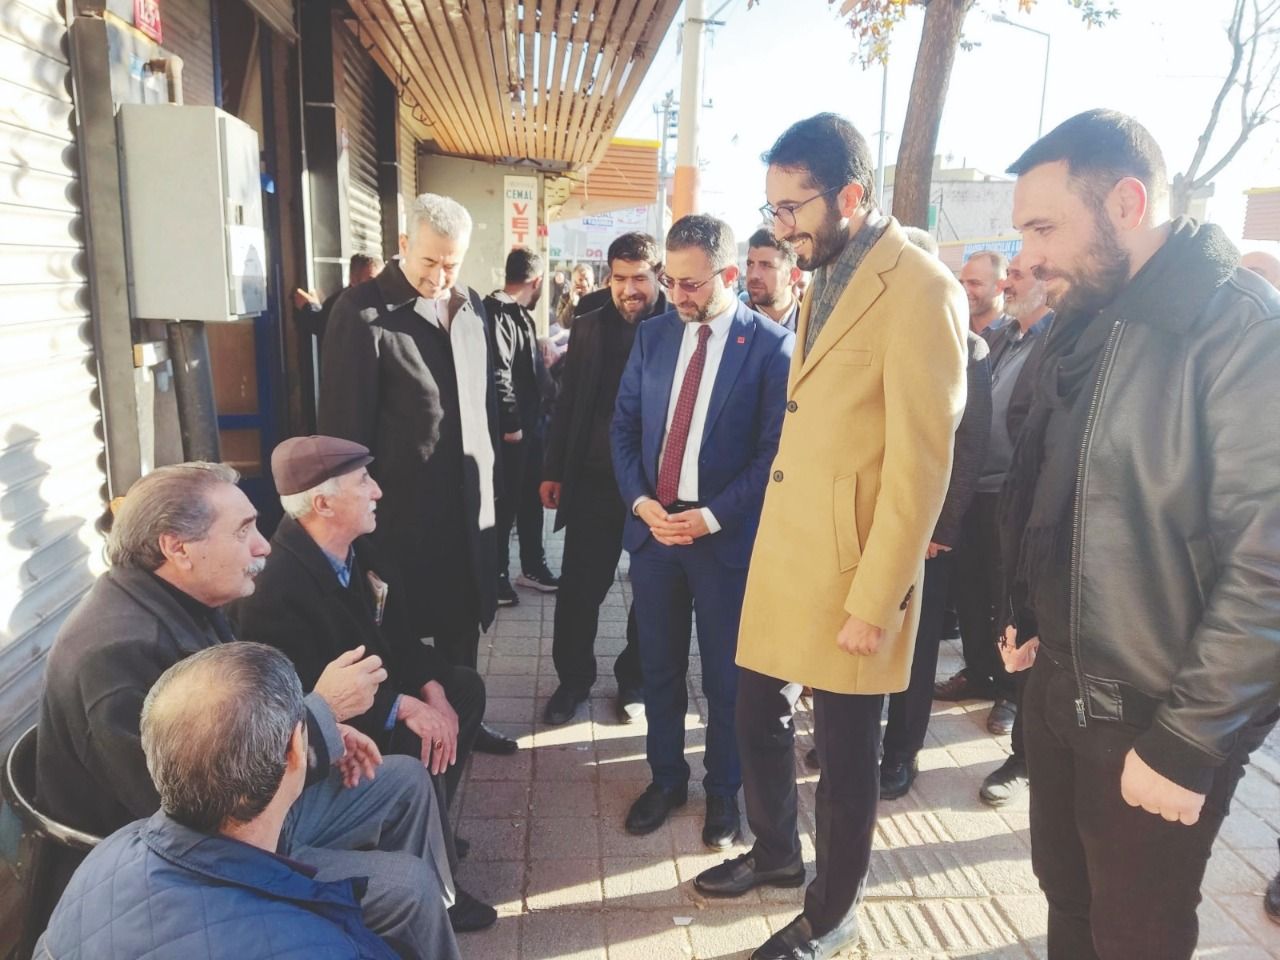 Abdülkadir Karaduman listens out for the problems of the citizens in Ergani